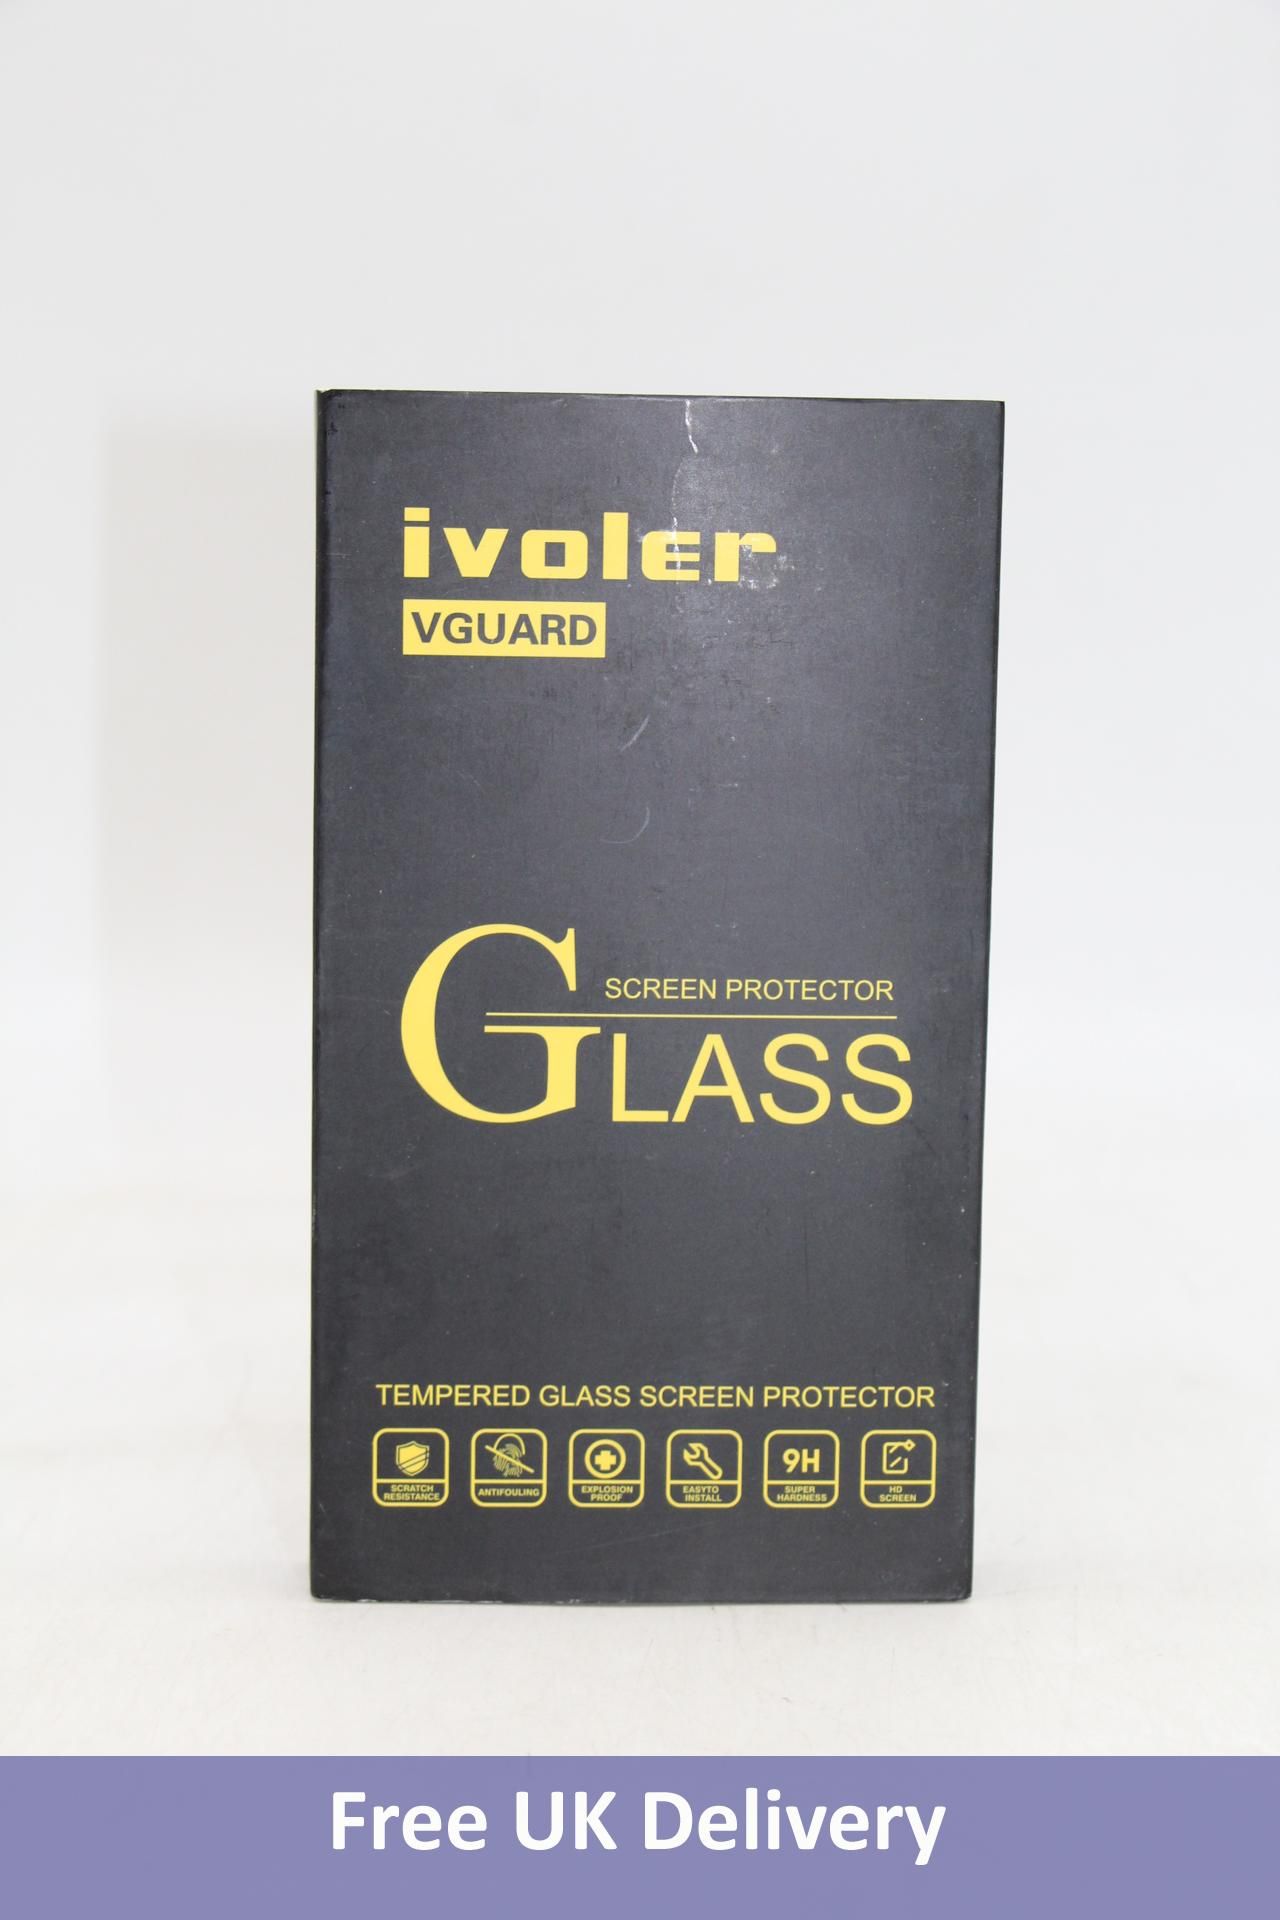 Eleven Ivoler VGuard Screen Protector Glass for Mobile Phones